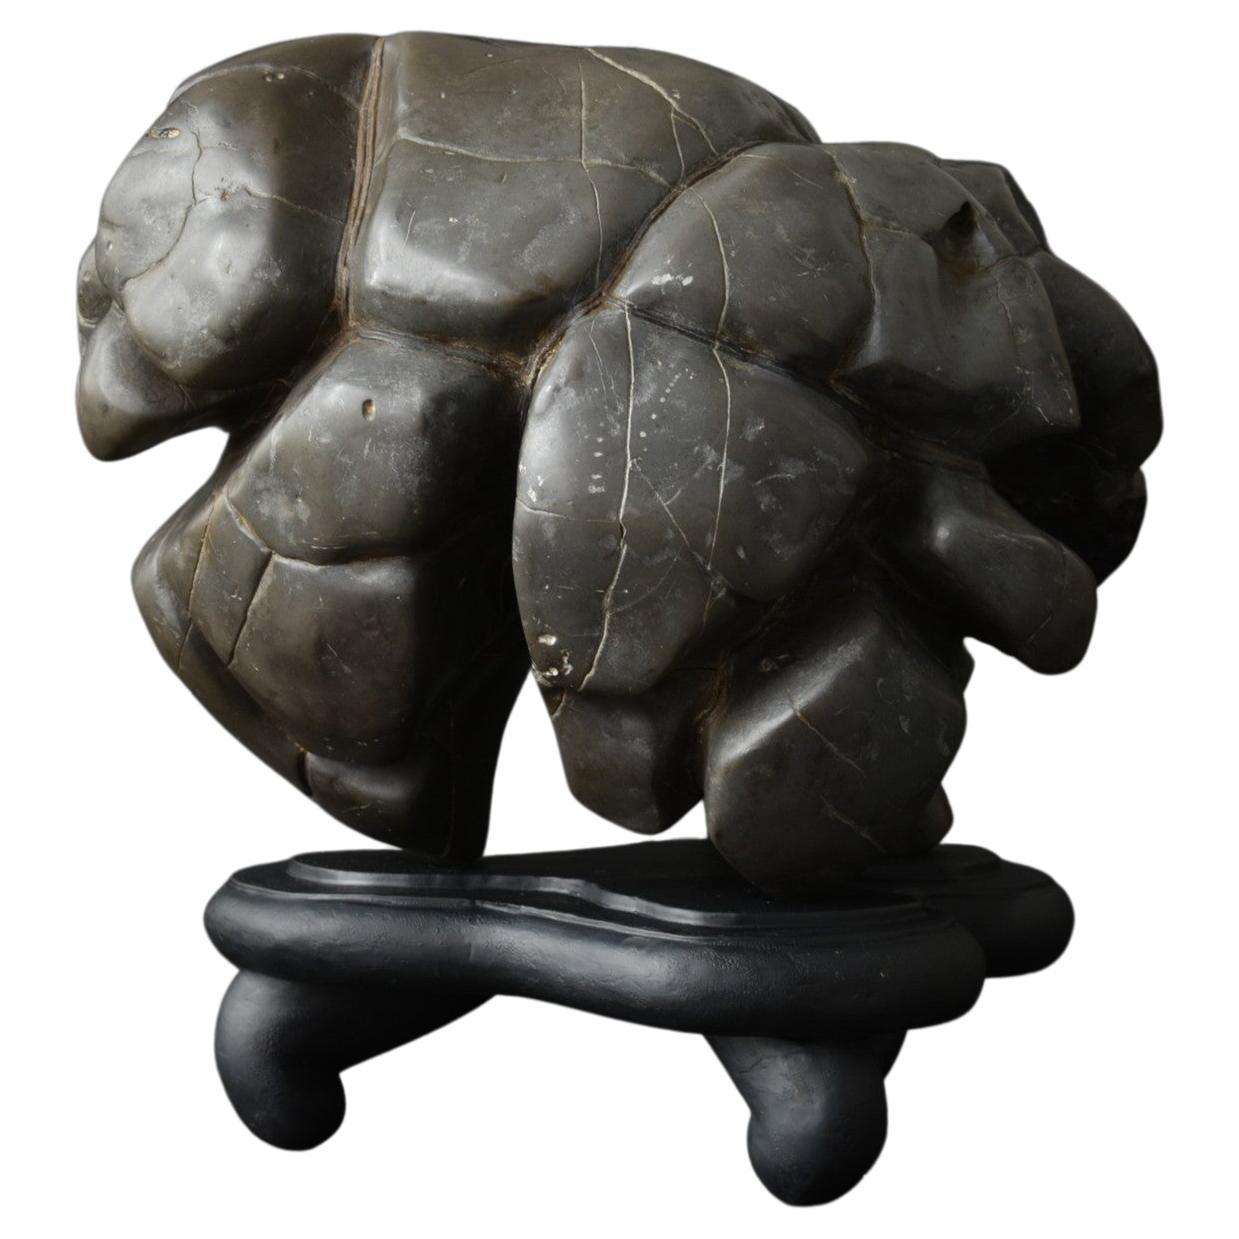 Old Japanese Scholar's Stone/Tortoise Shell Type Stone/AppreciationStone/suiseki For Sale